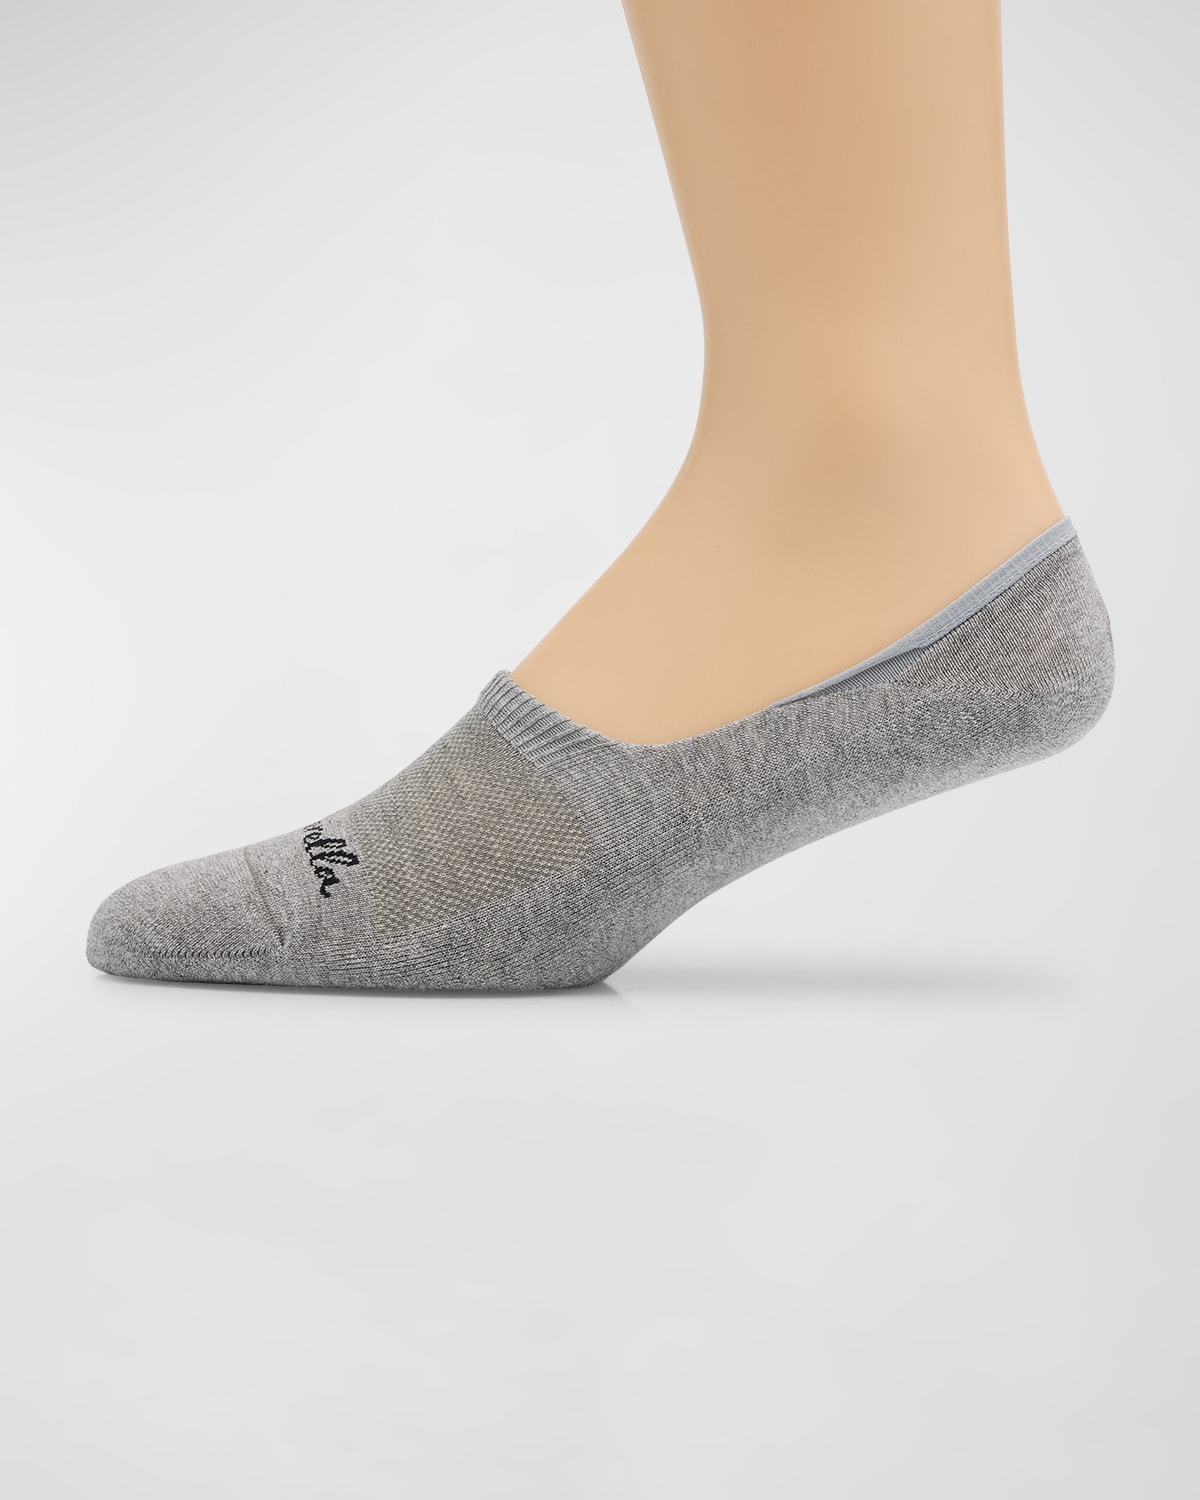 Men's Invisible Cushion Sole No-Show Socks